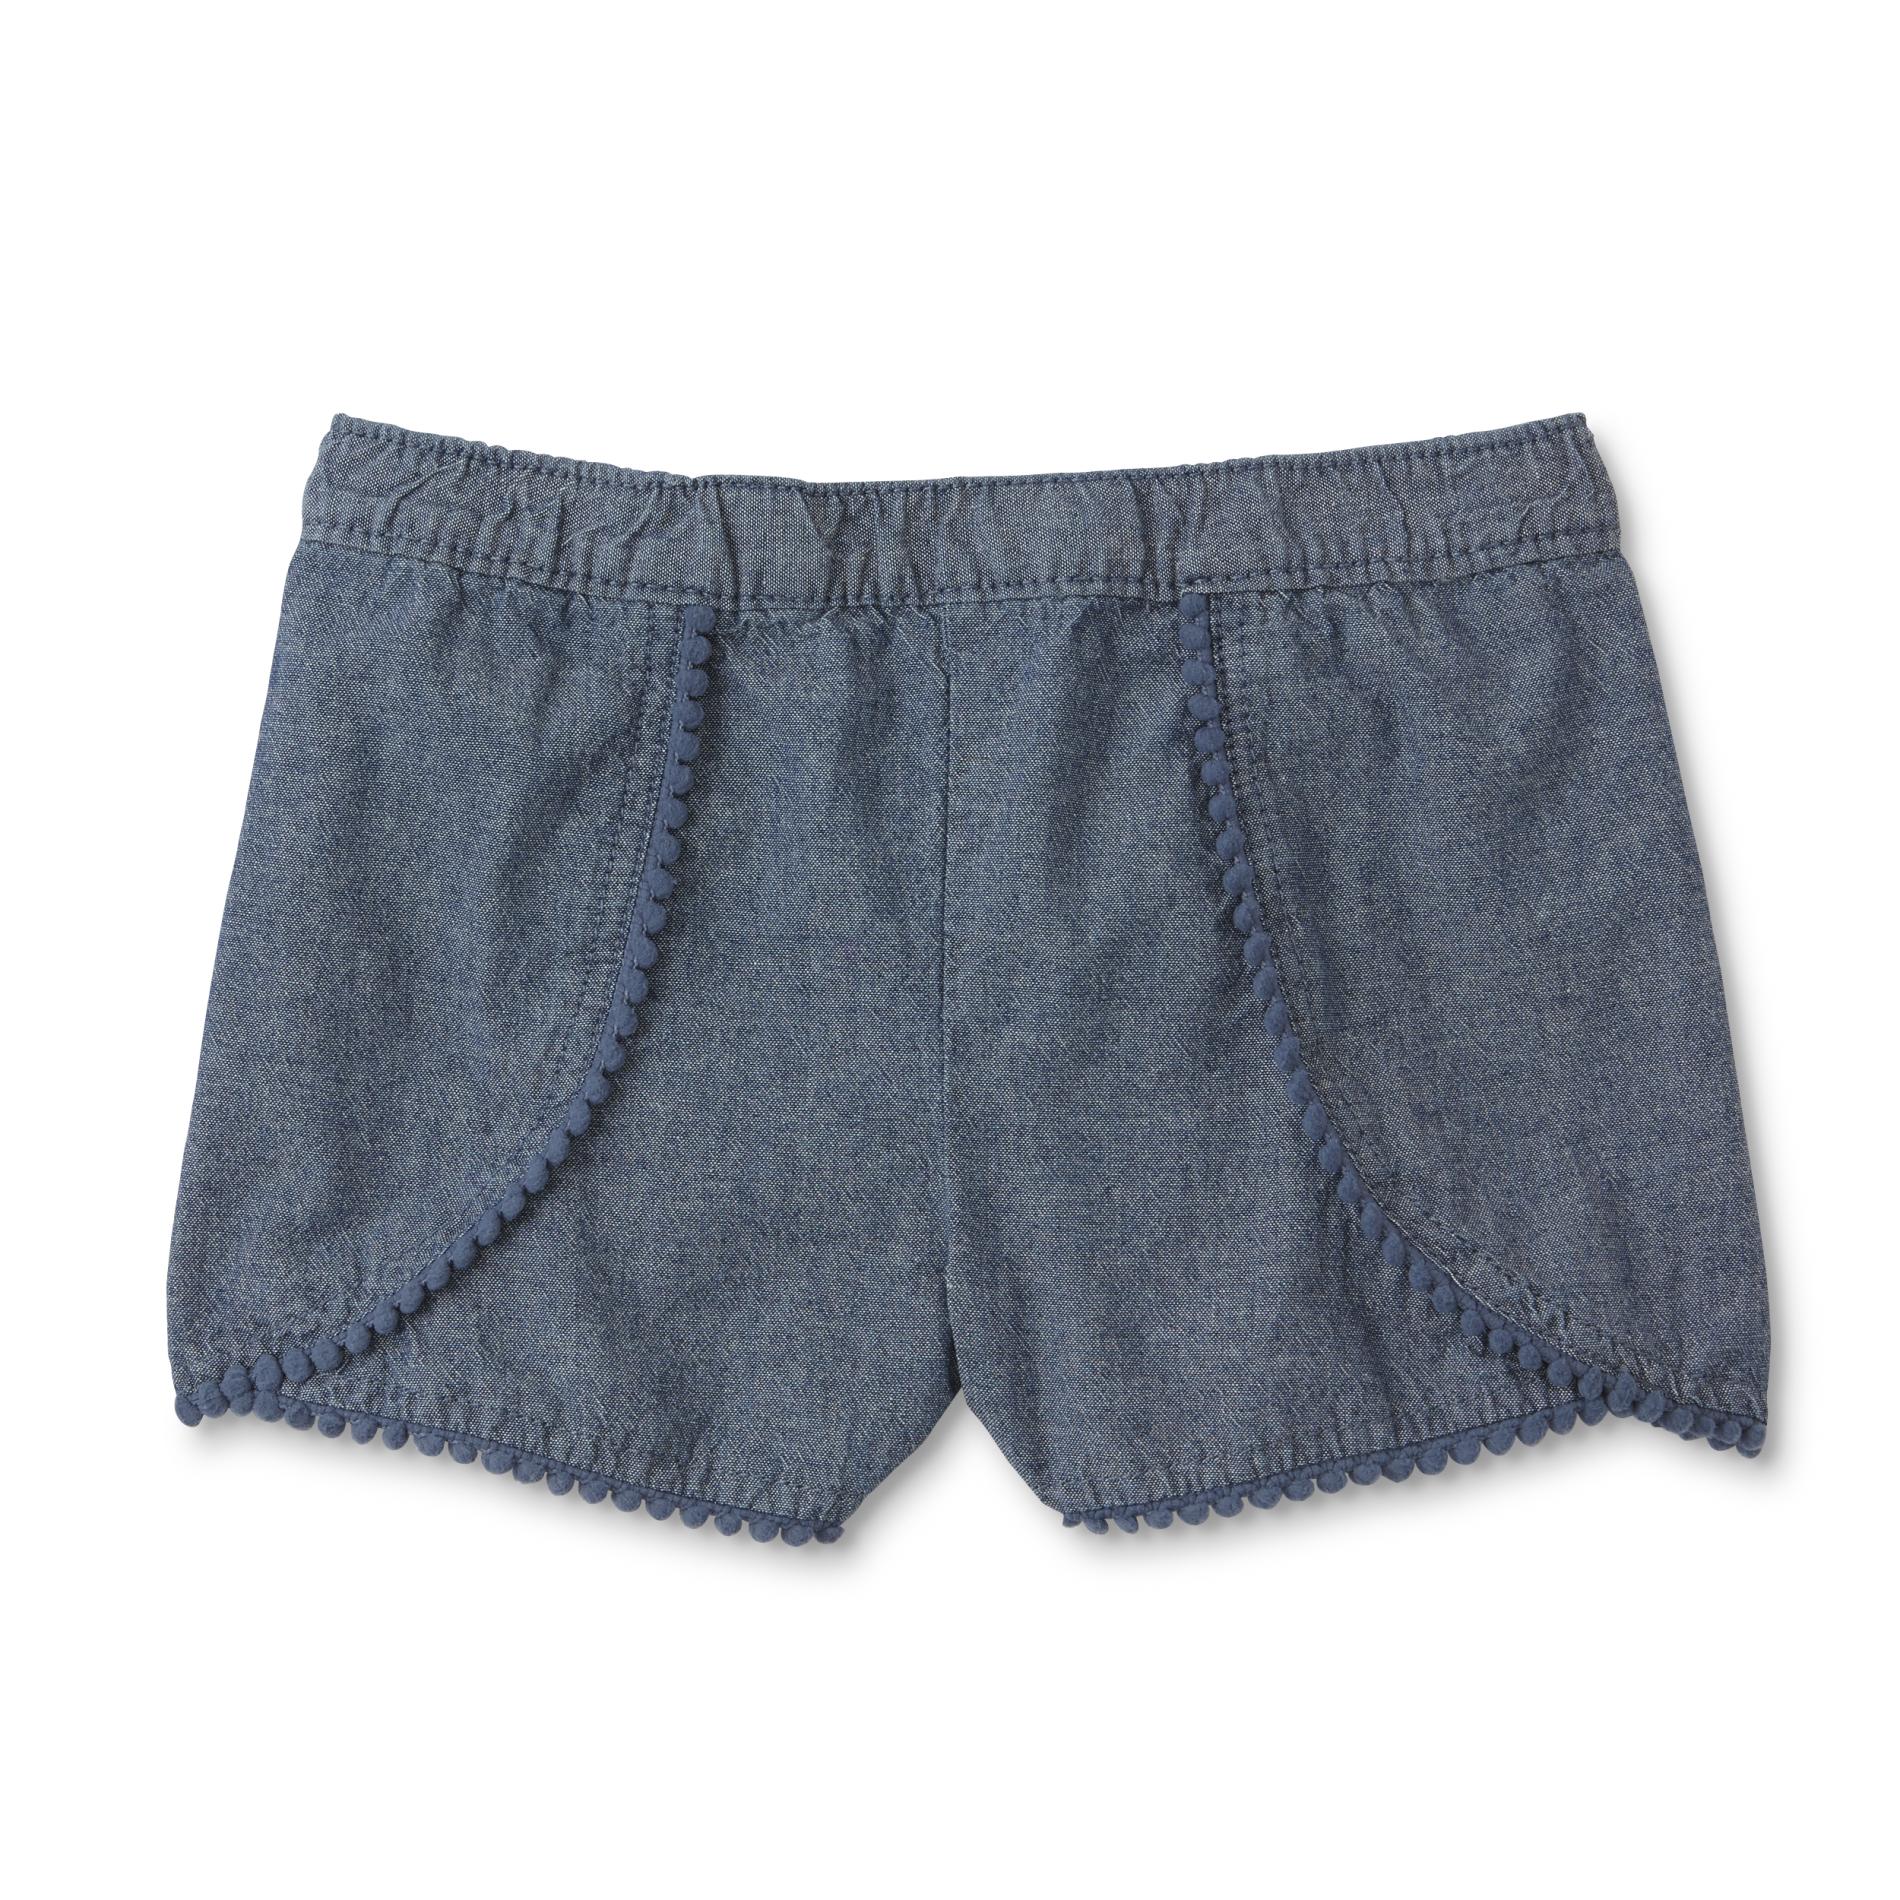 Toughskins Infant & Toddler Girls' Chambray Shorts